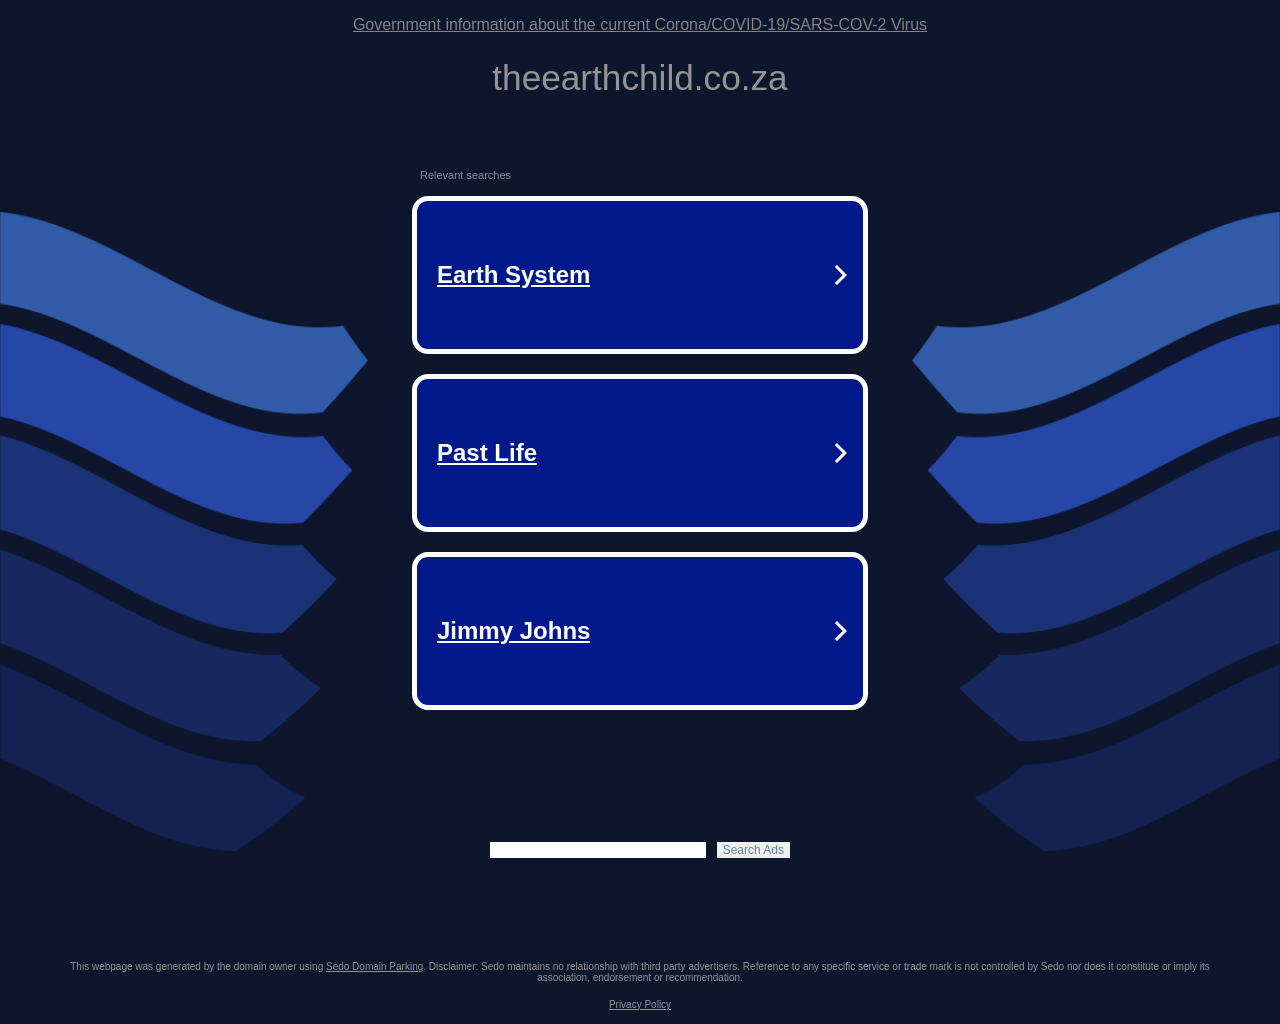 theearthchild.co.za